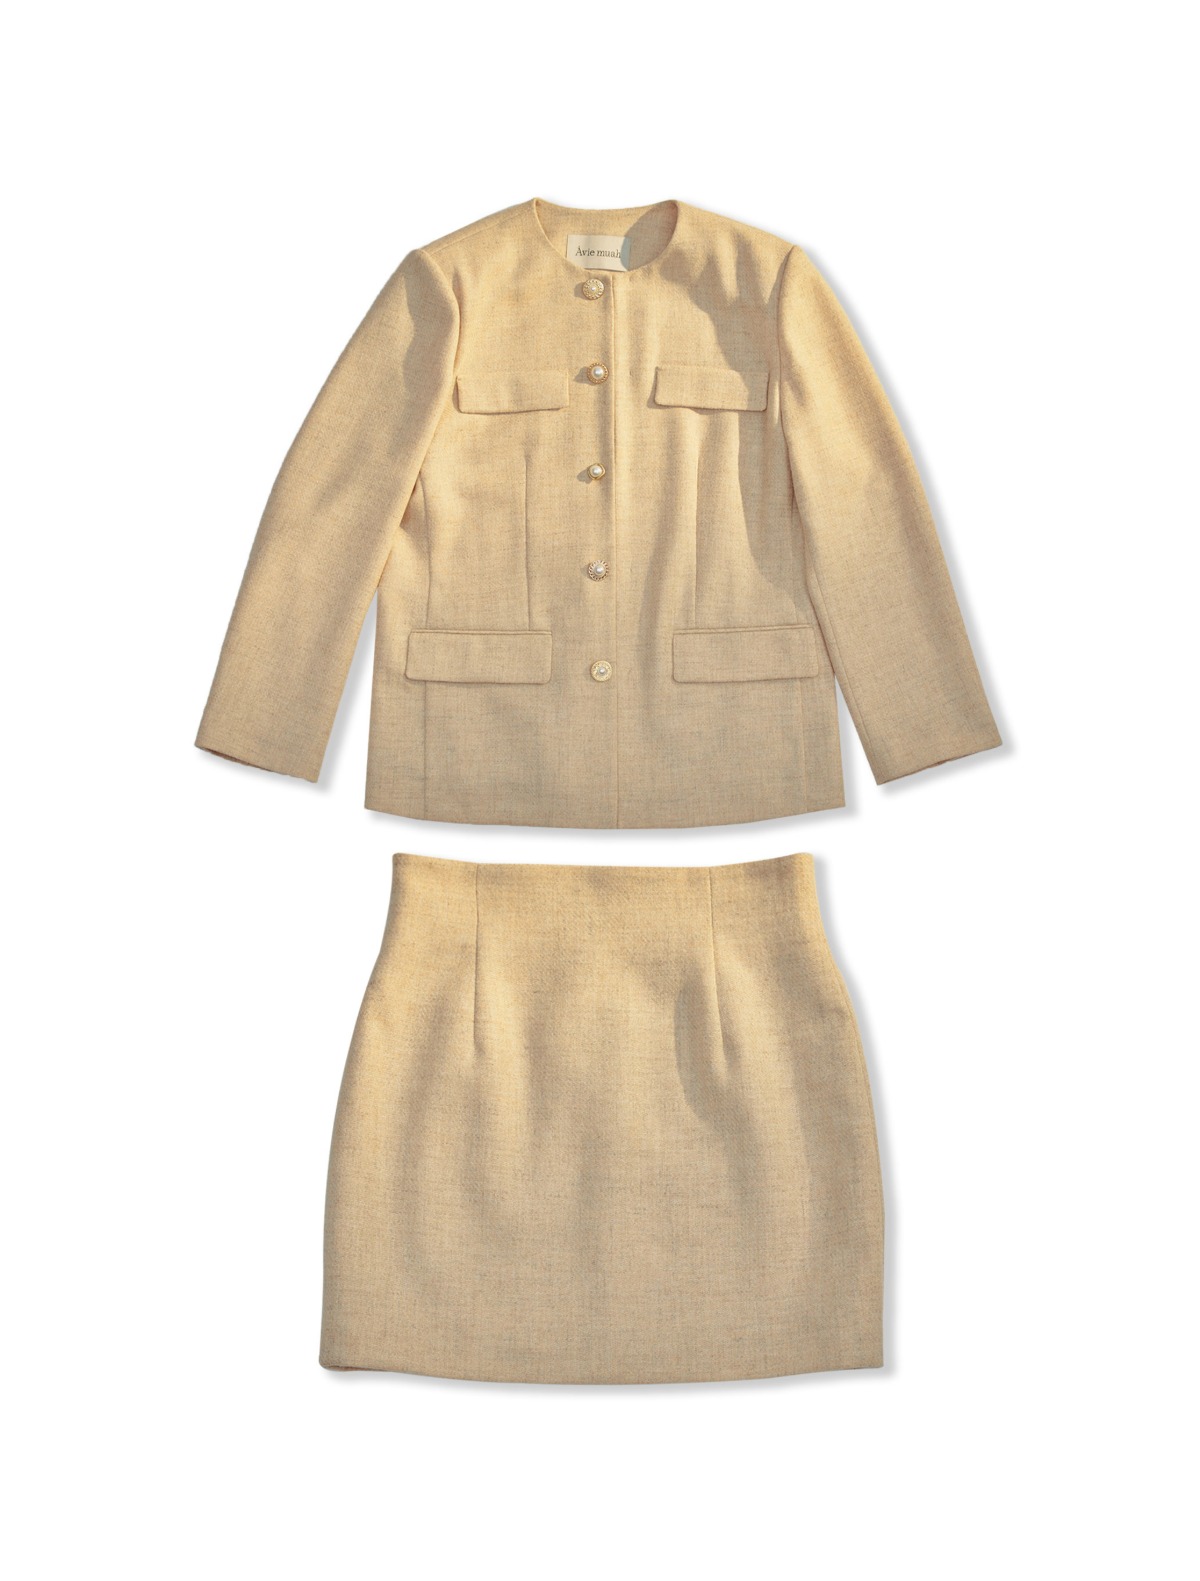 Àvie muah Spring Suit (Short Skirt)